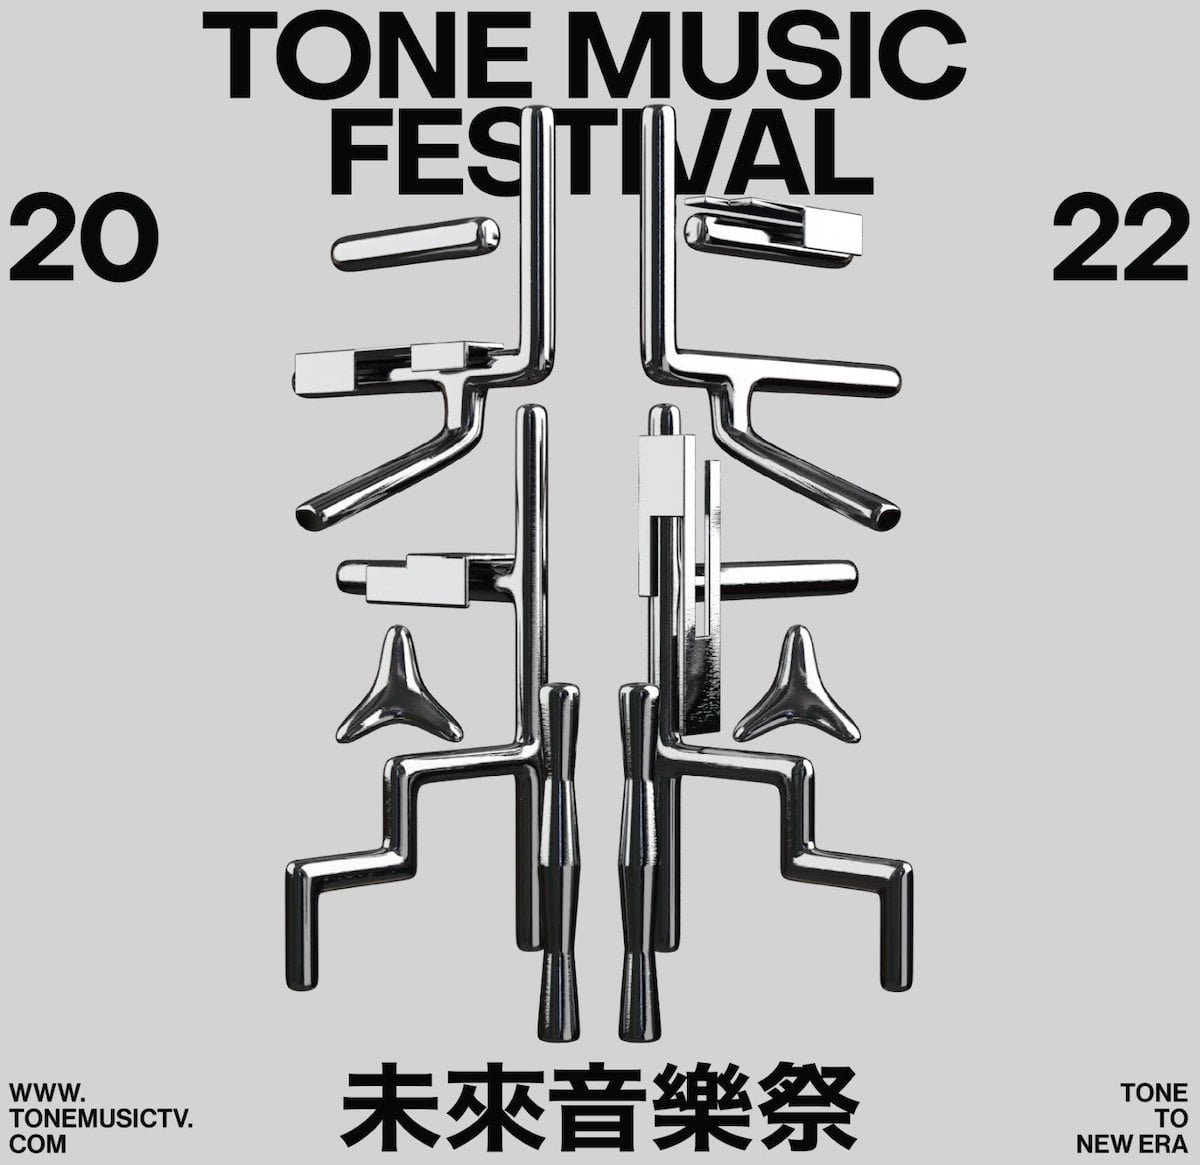 Tone Music Festival 2022